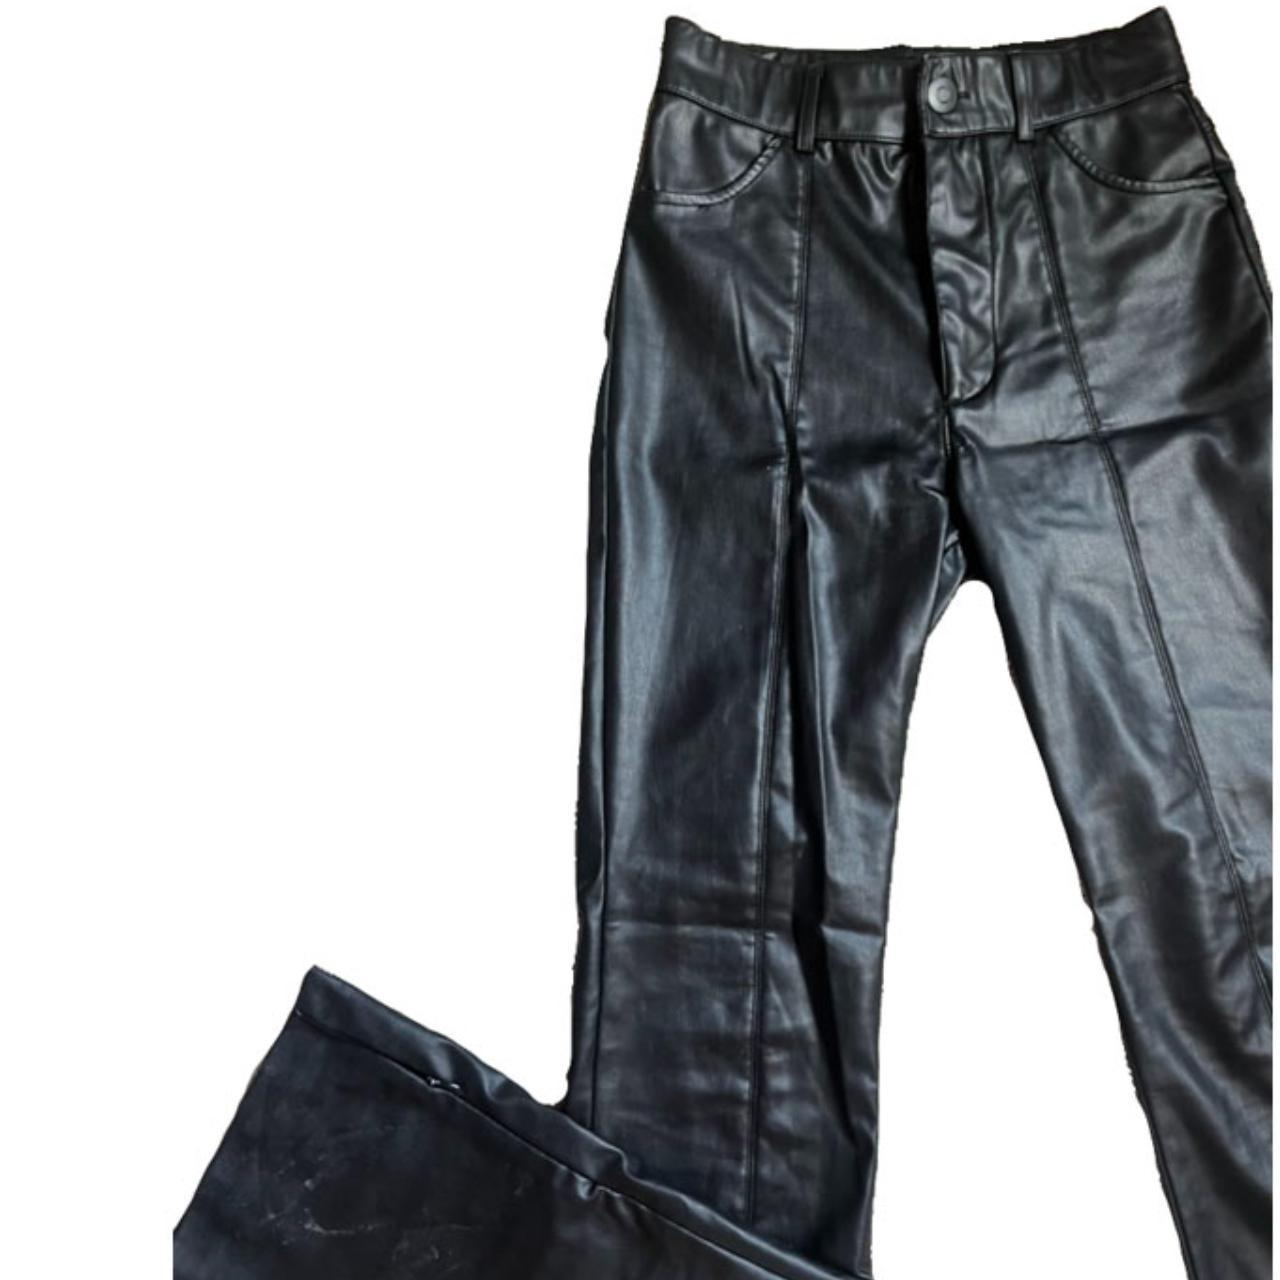 Pleather black Zara flare trousers Perfect... - Depop